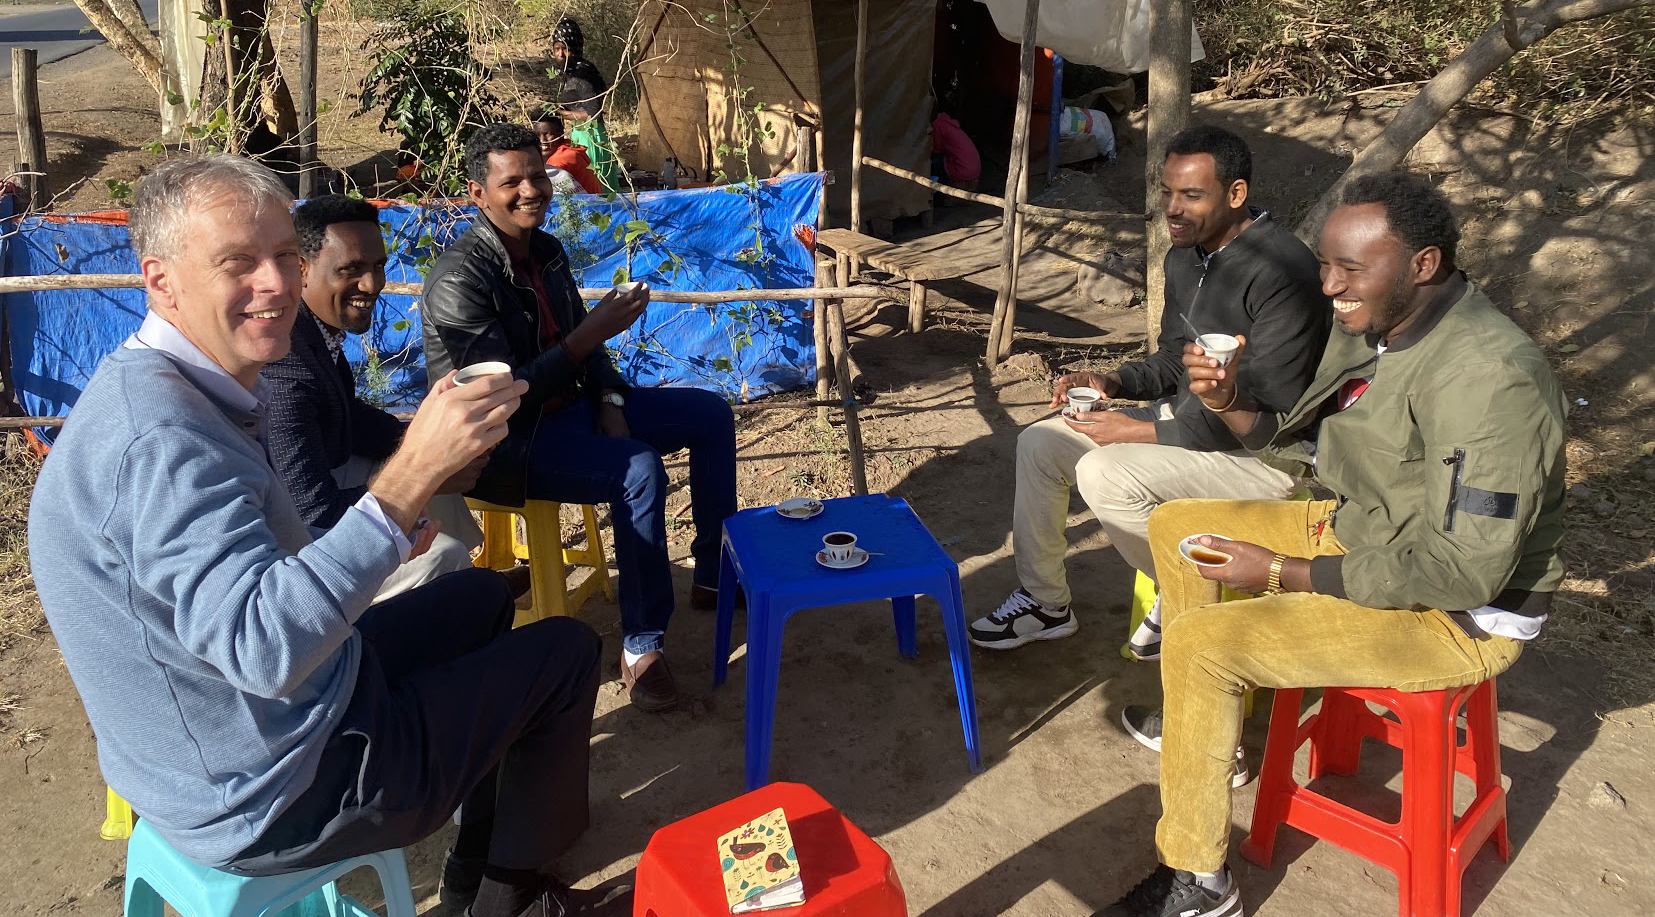 Gentlemen in Ethiopia sitting outside having coffee